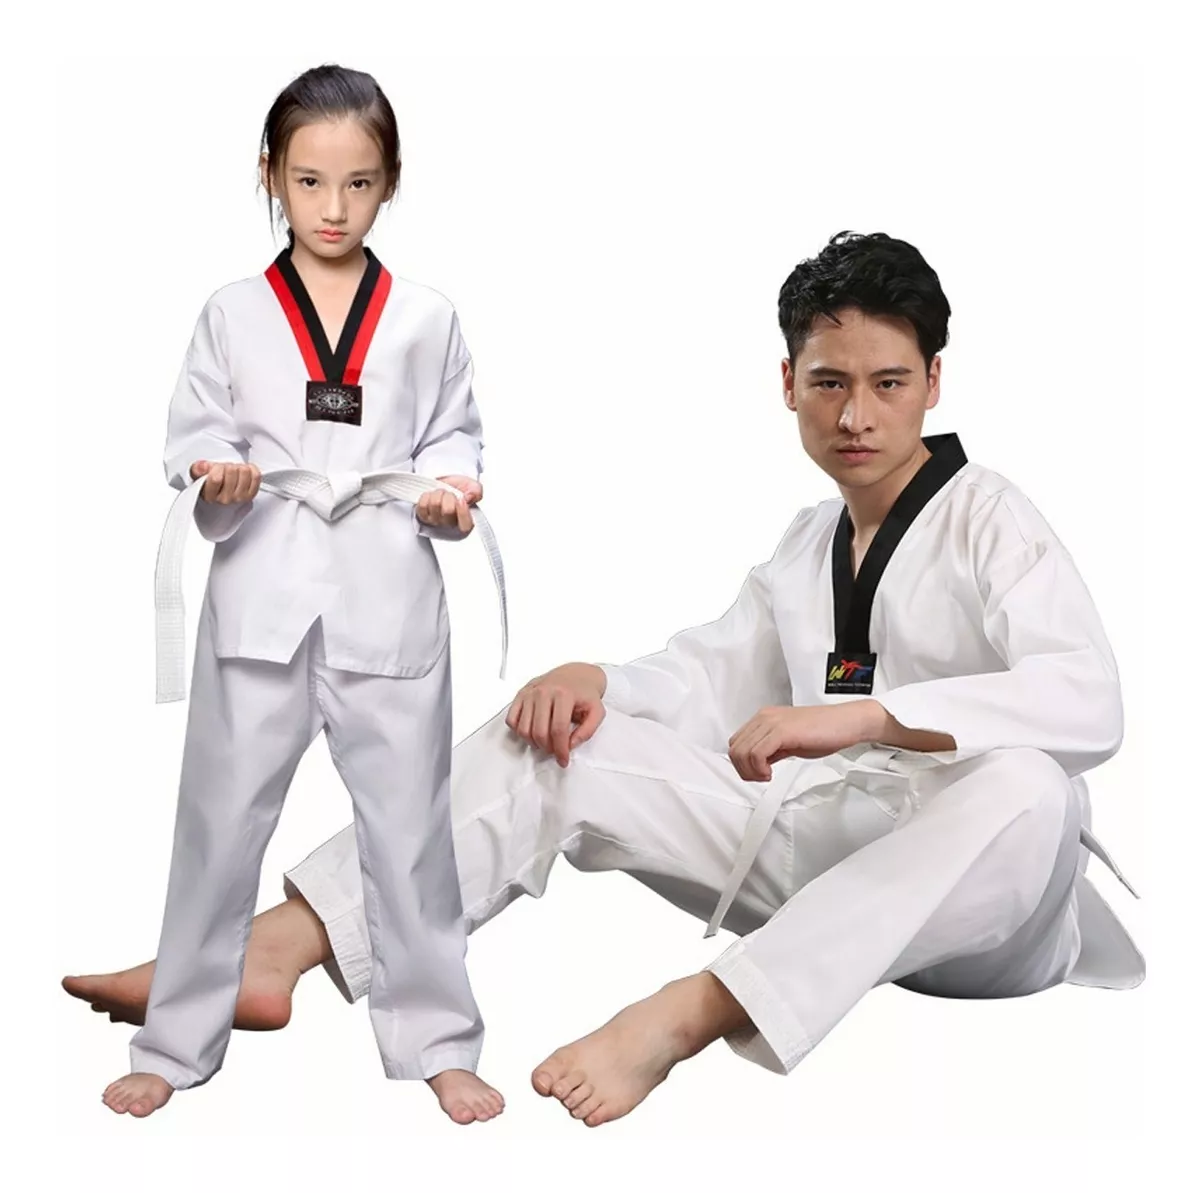 Conjunto De Uniforme De Kárate/taekwondo